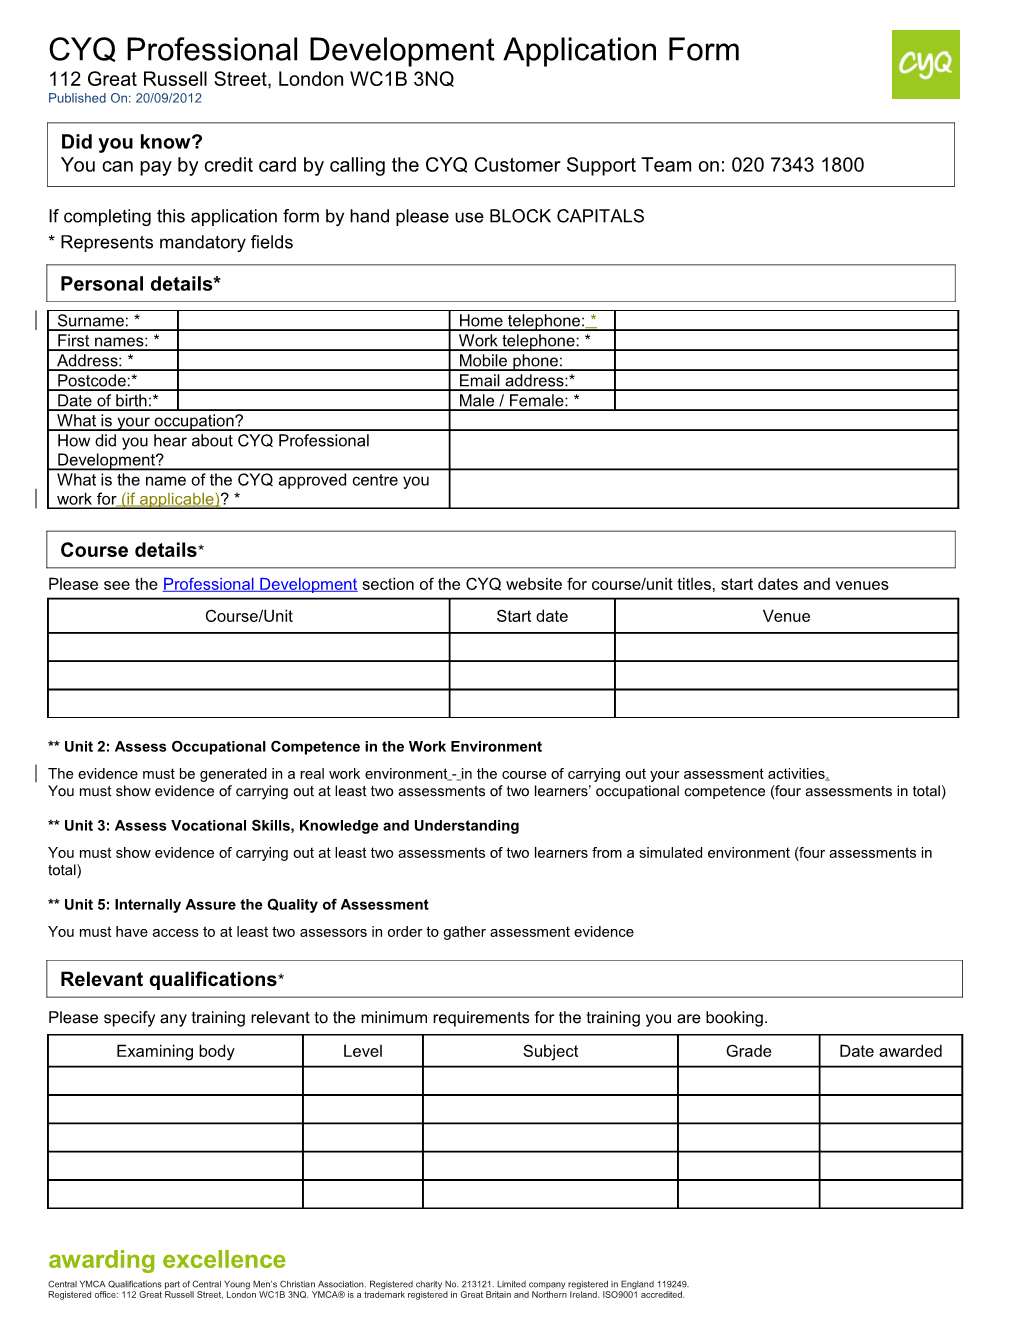 YMCA Fitness Industry Training Application Form